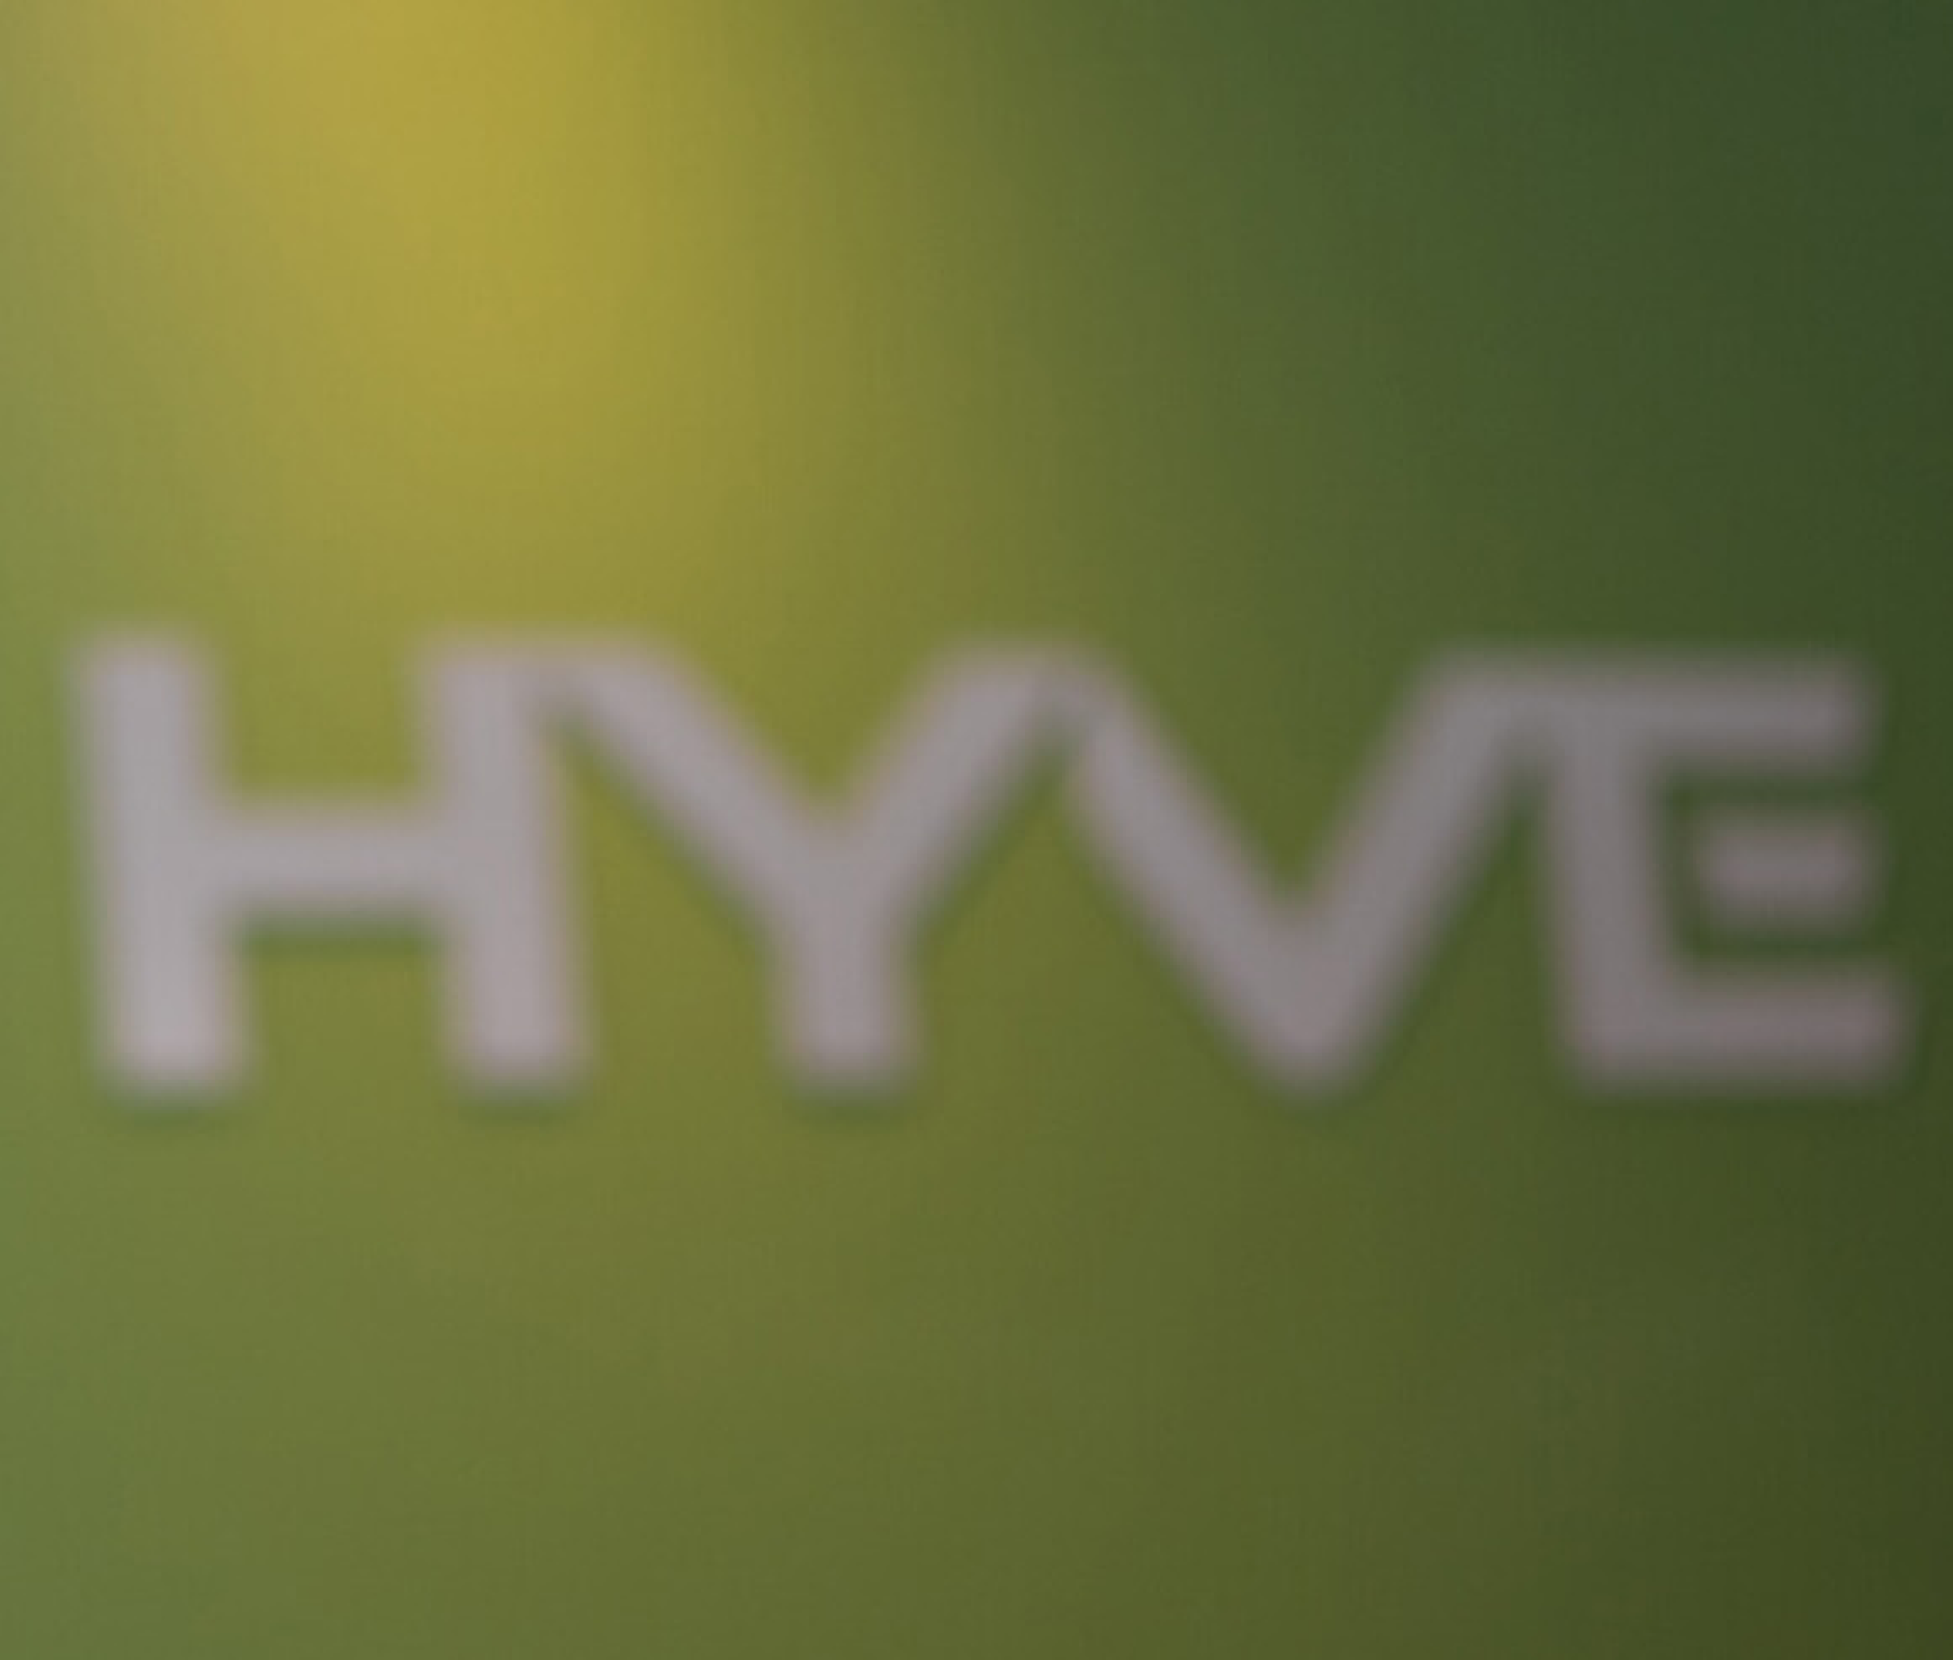 hyve logo on wall